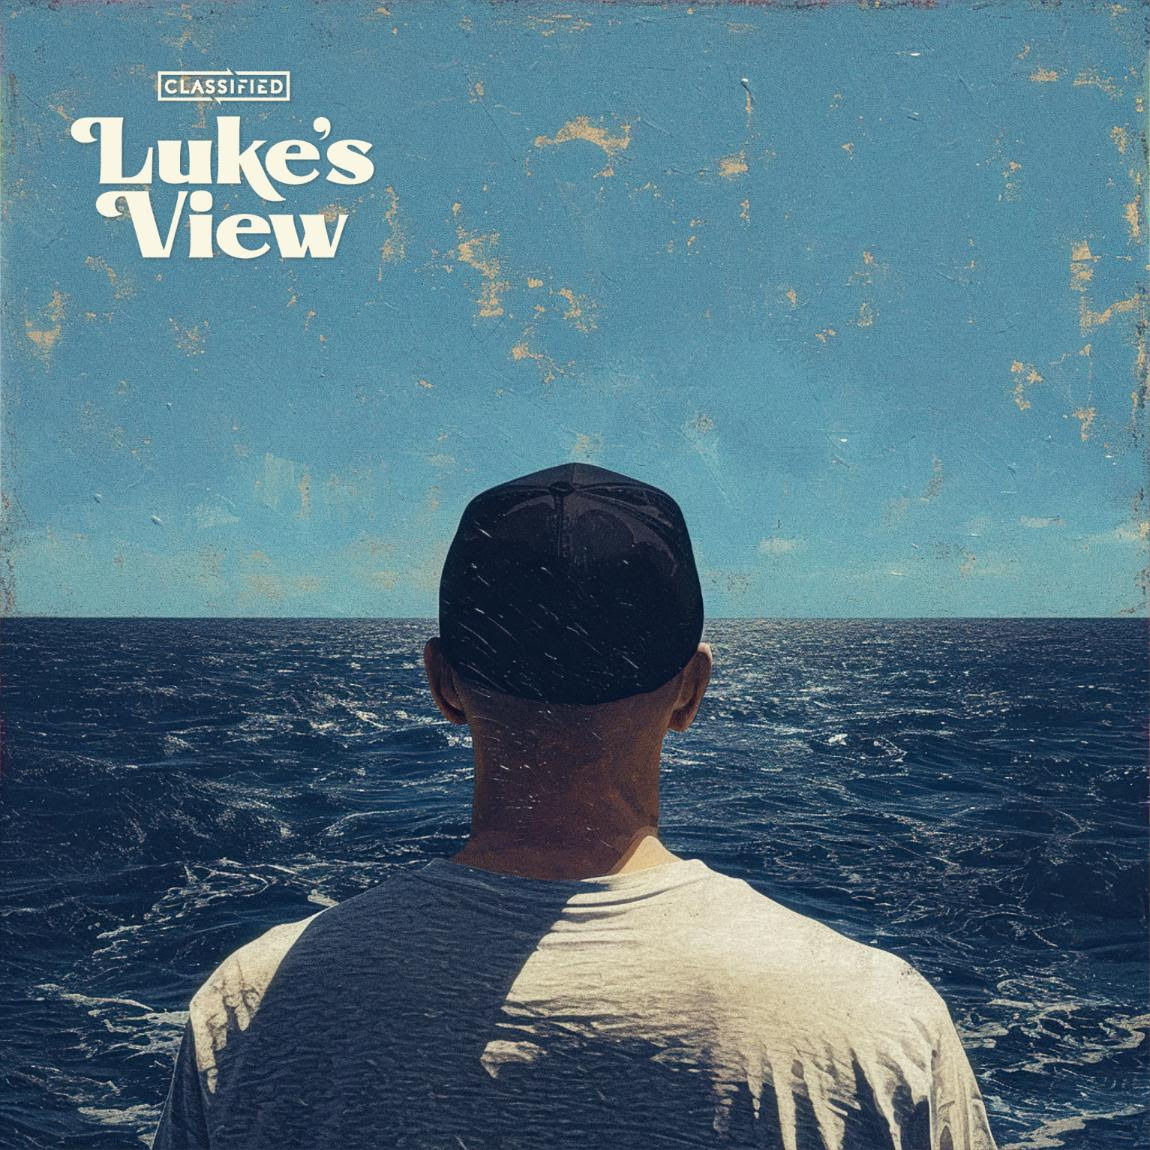 @Classified's New Album #LukesView Hits The Airwaves

#Stream: wix.to/h9Qi8jN